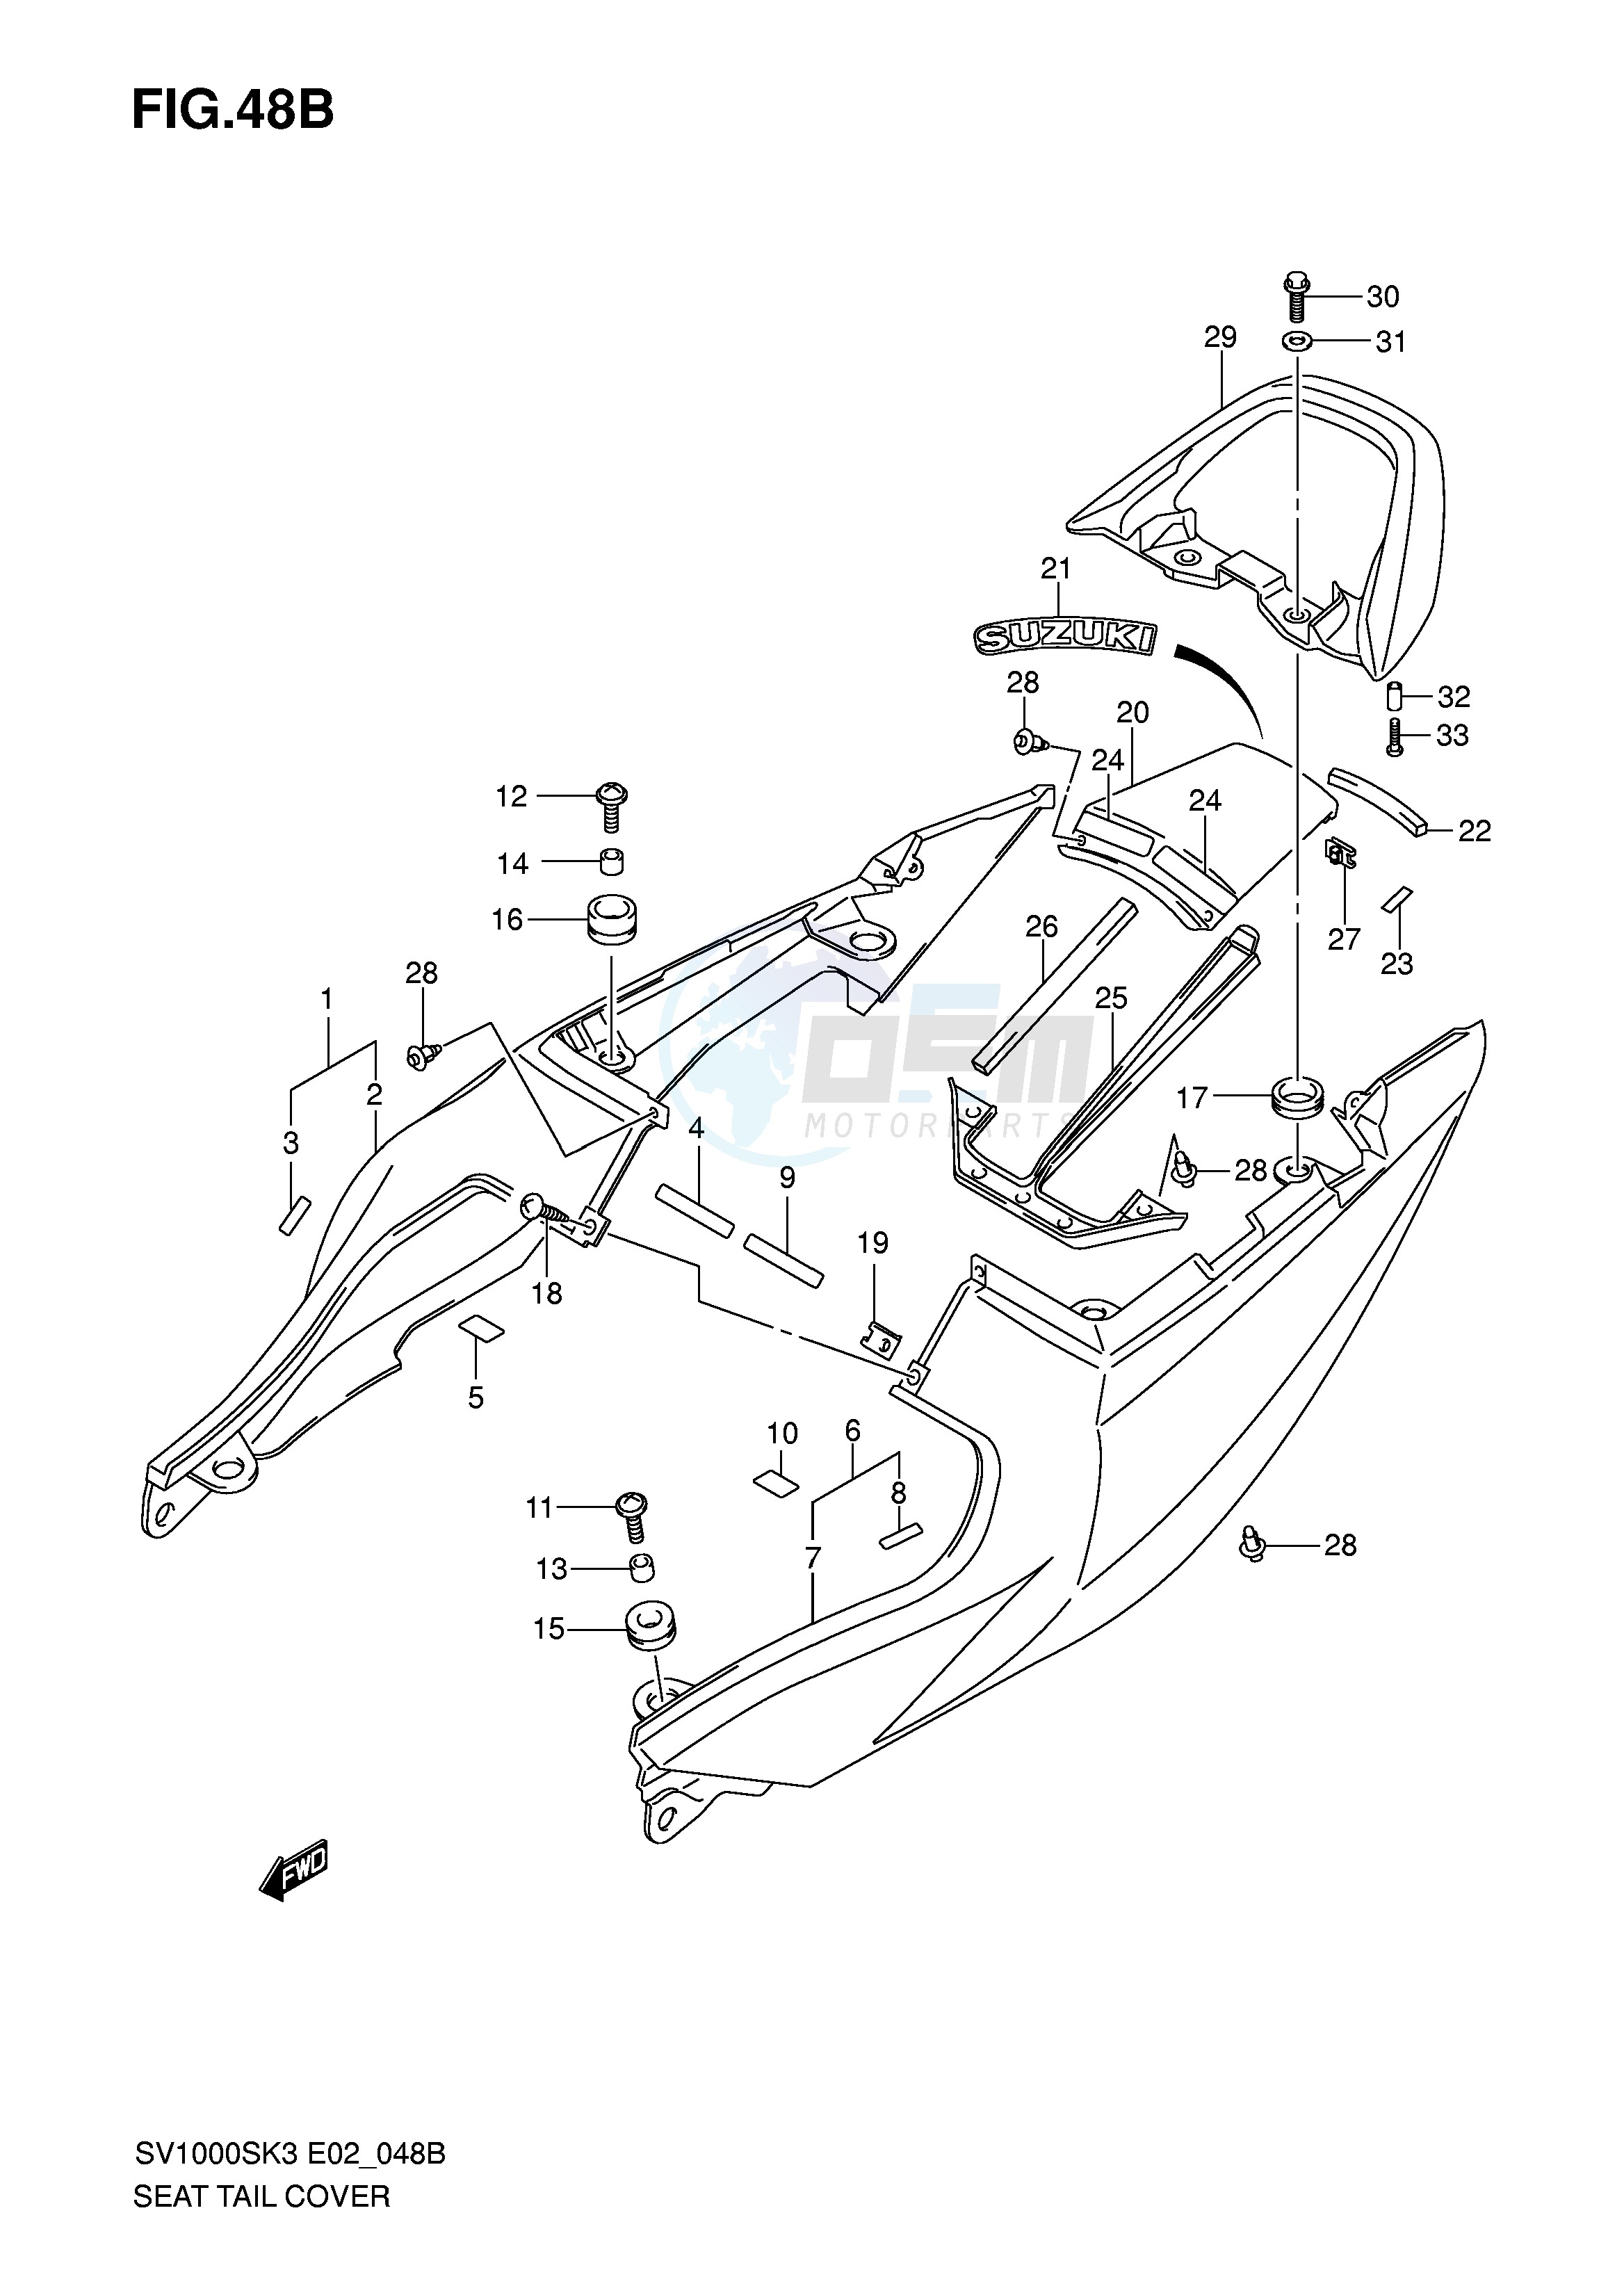 SEAT TAIL COVER (SV1000SK4 S1K4 S2K4) blueprint